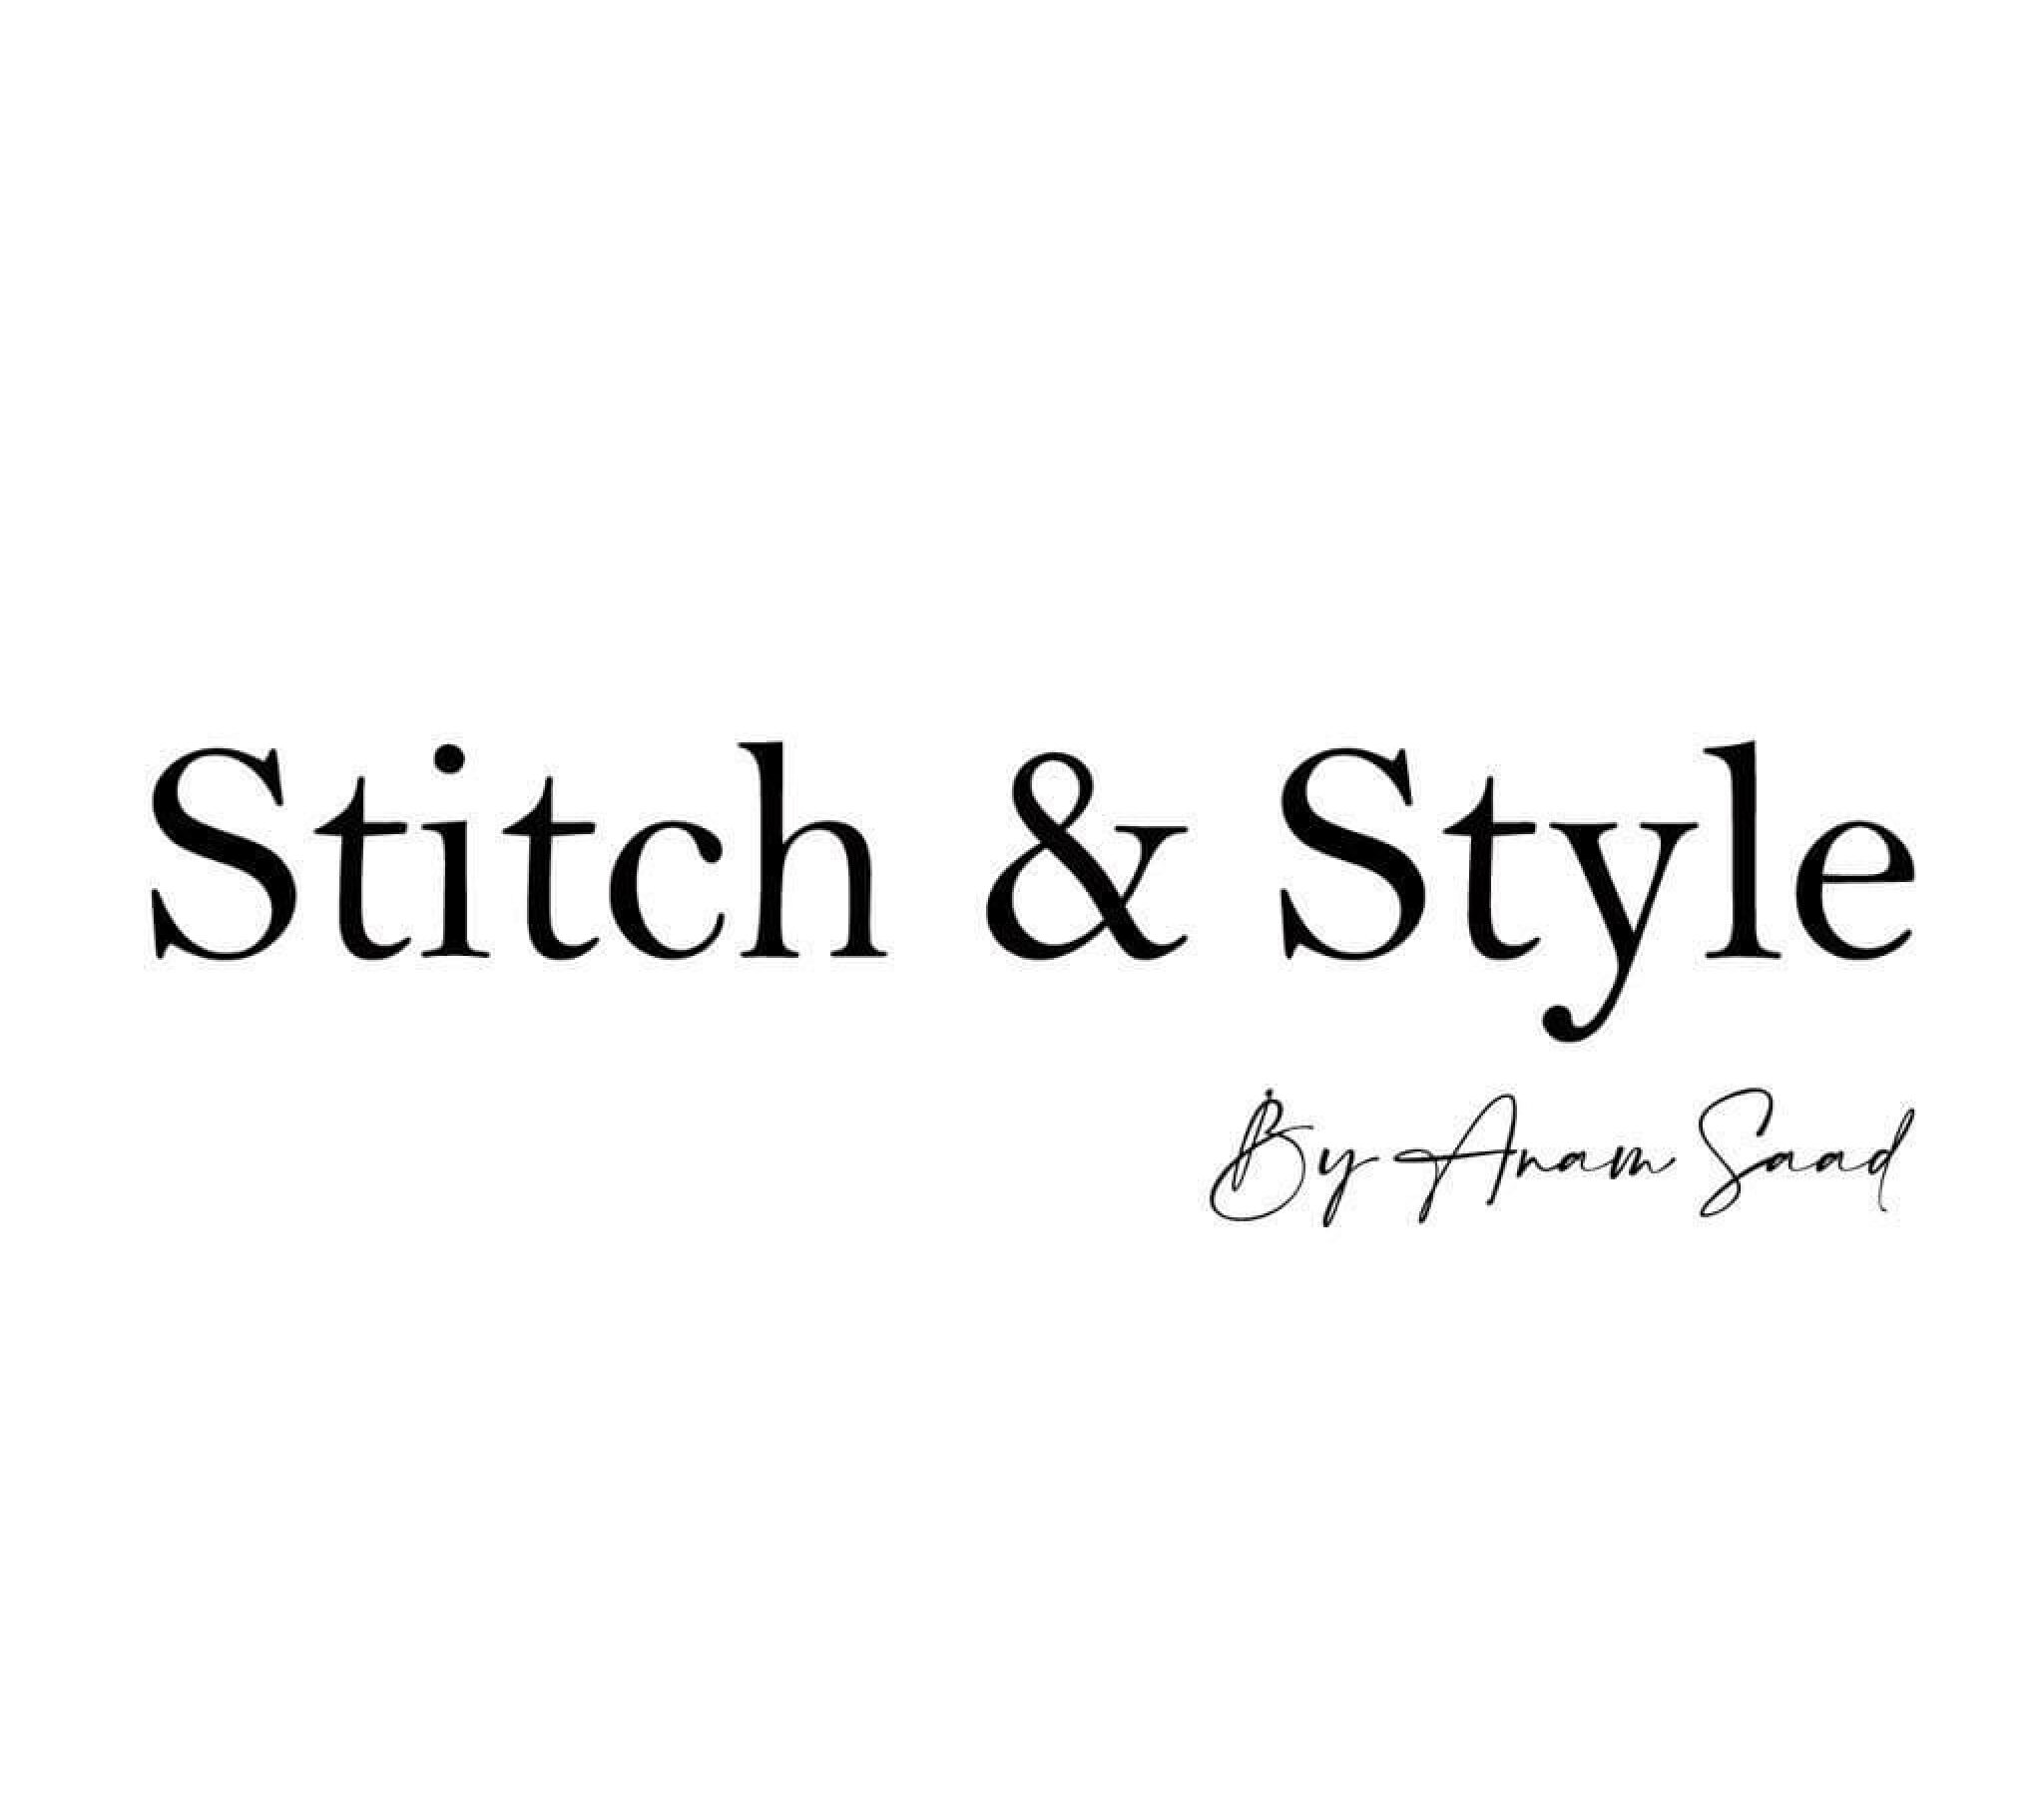 Stitch & Style